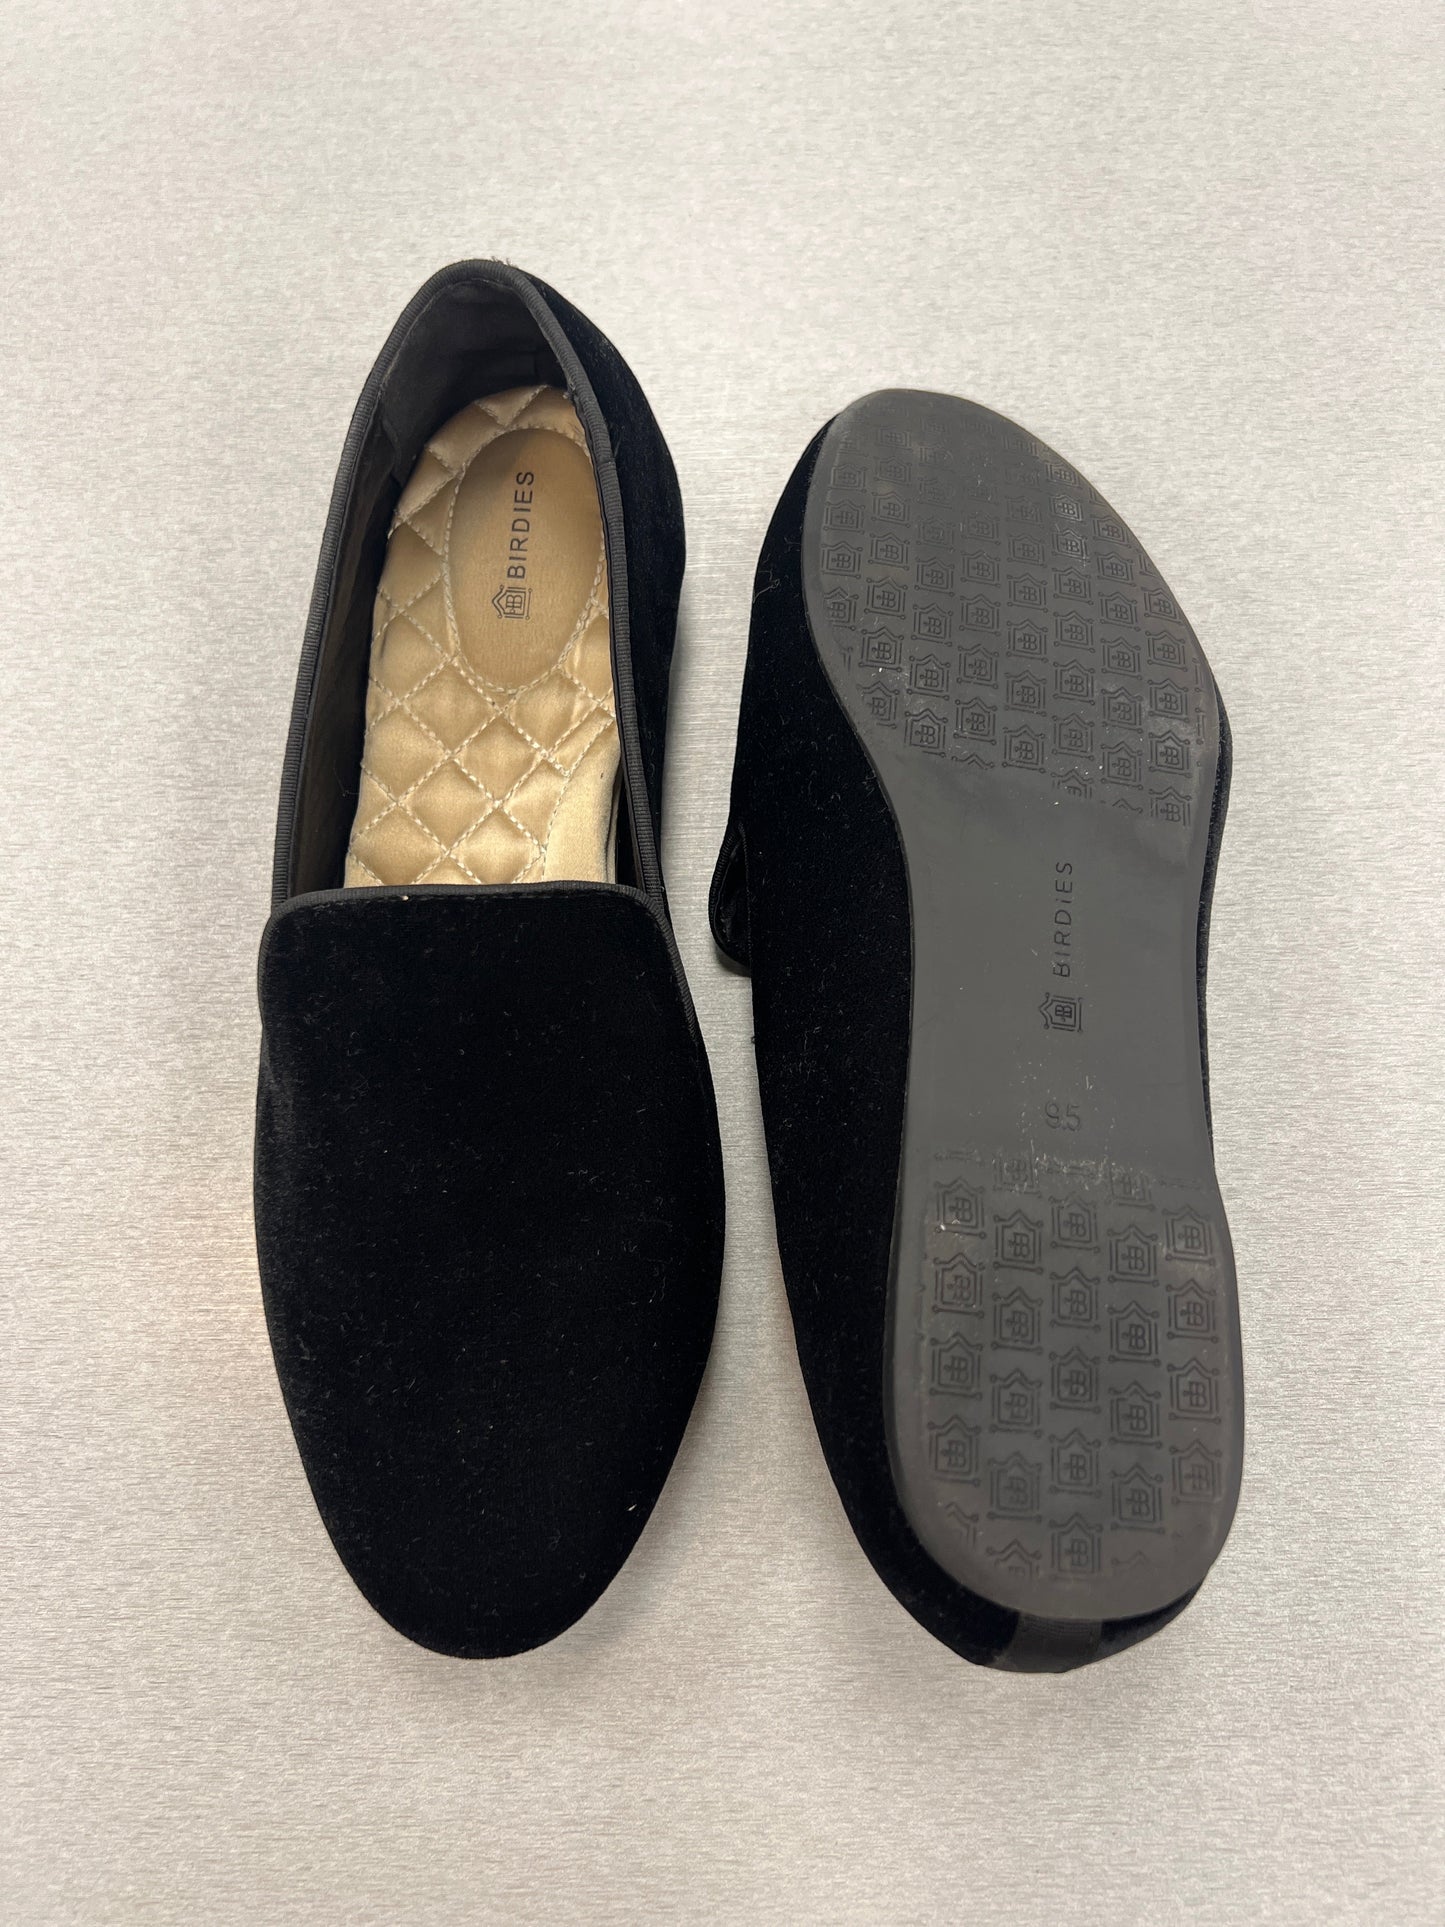 Black Shoes Flats Cma, Size 9.5